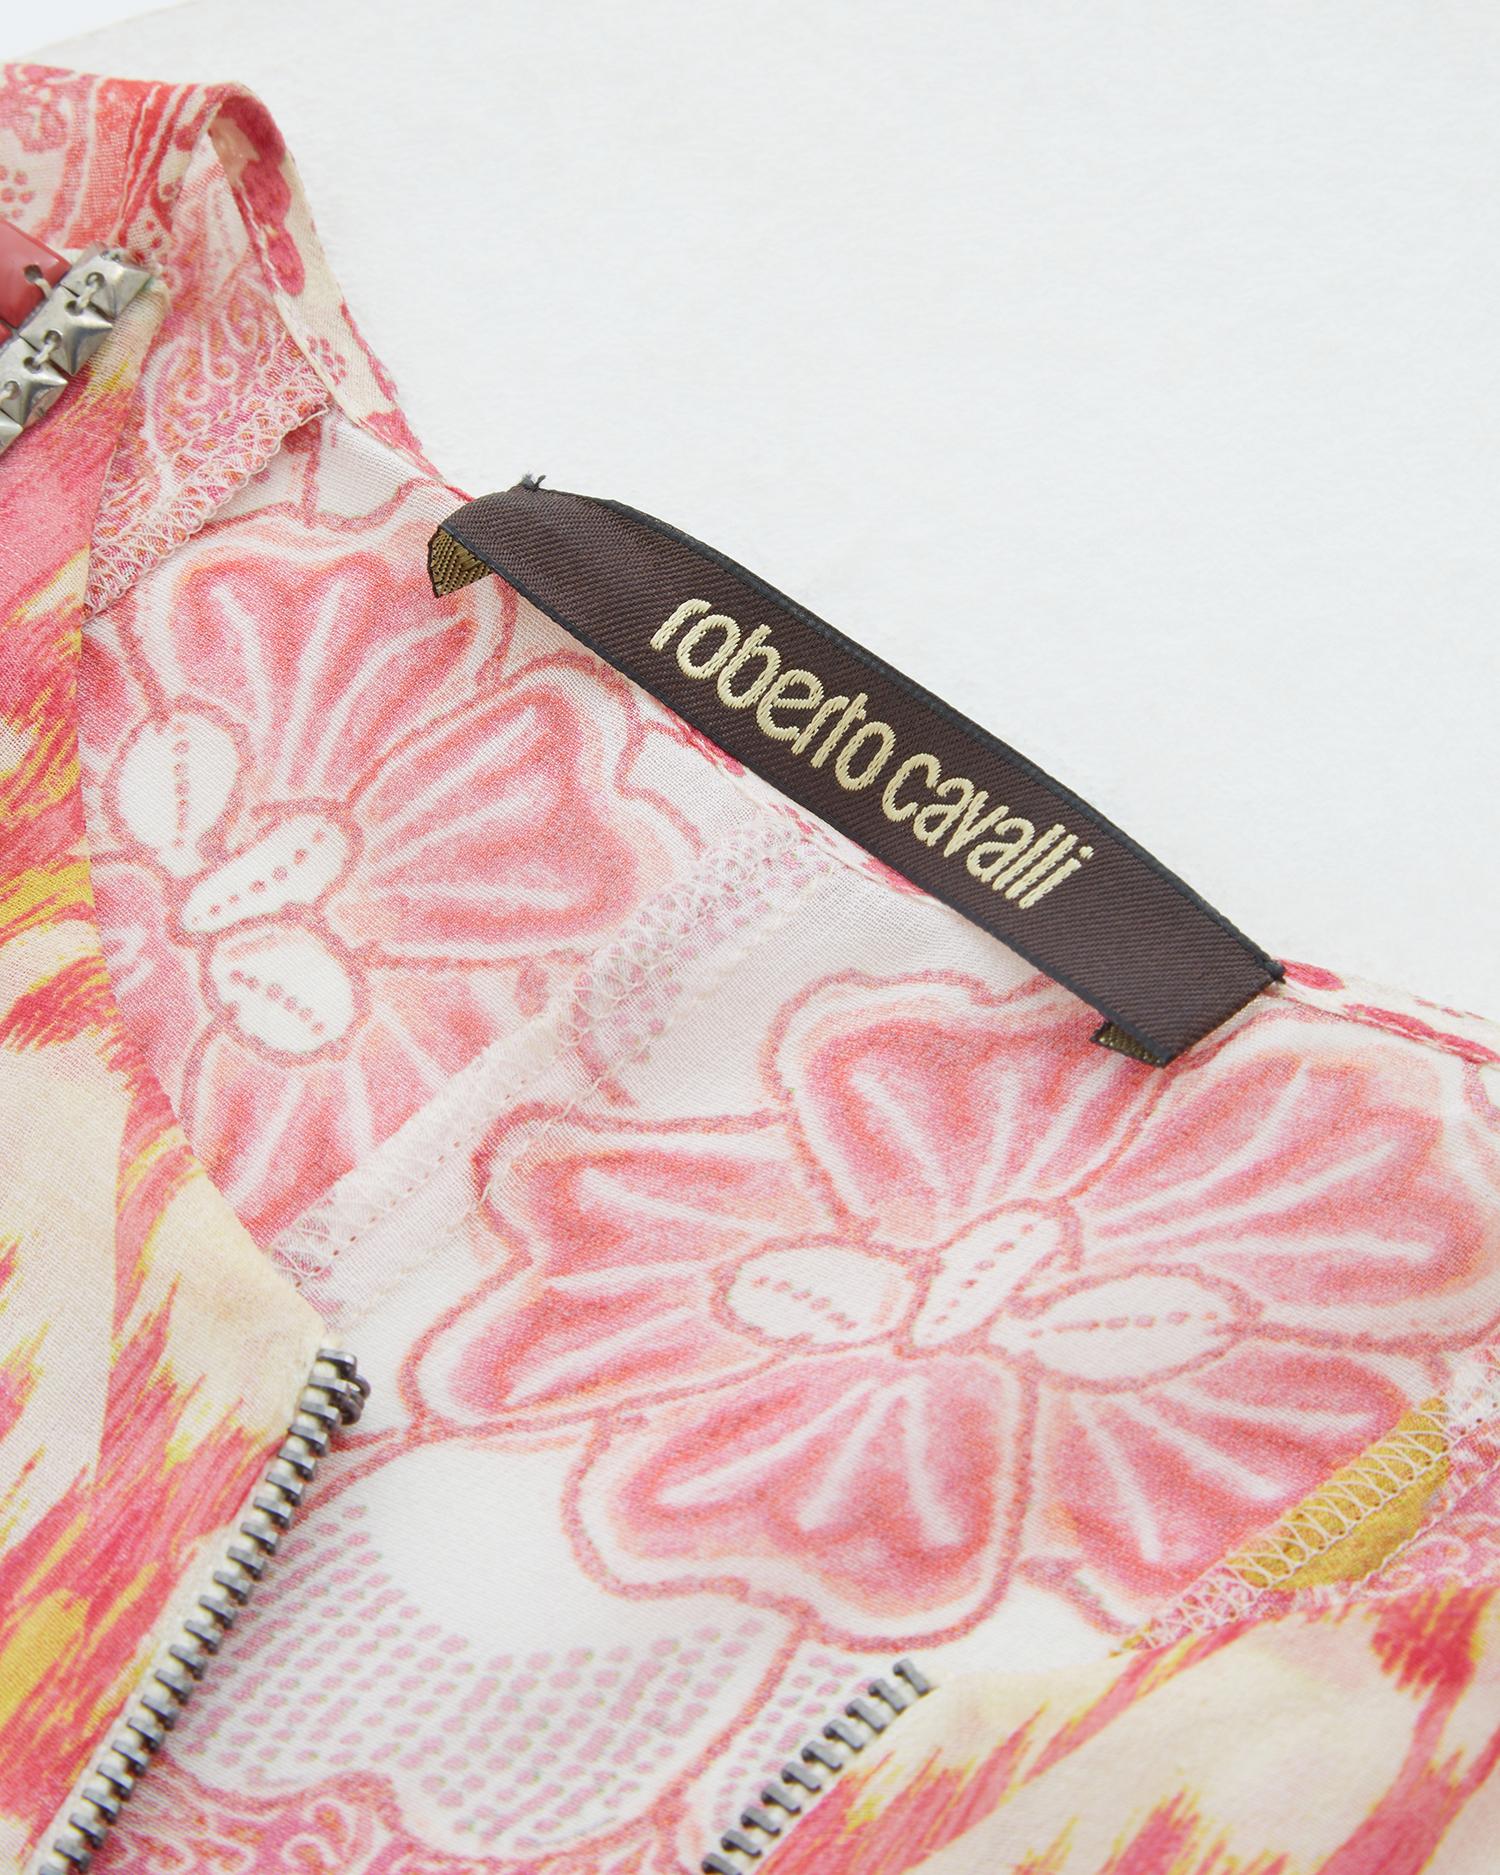 Roberto Cavalli Stud embellished top and silk printed pants set, Resort 2014 For Sale 2